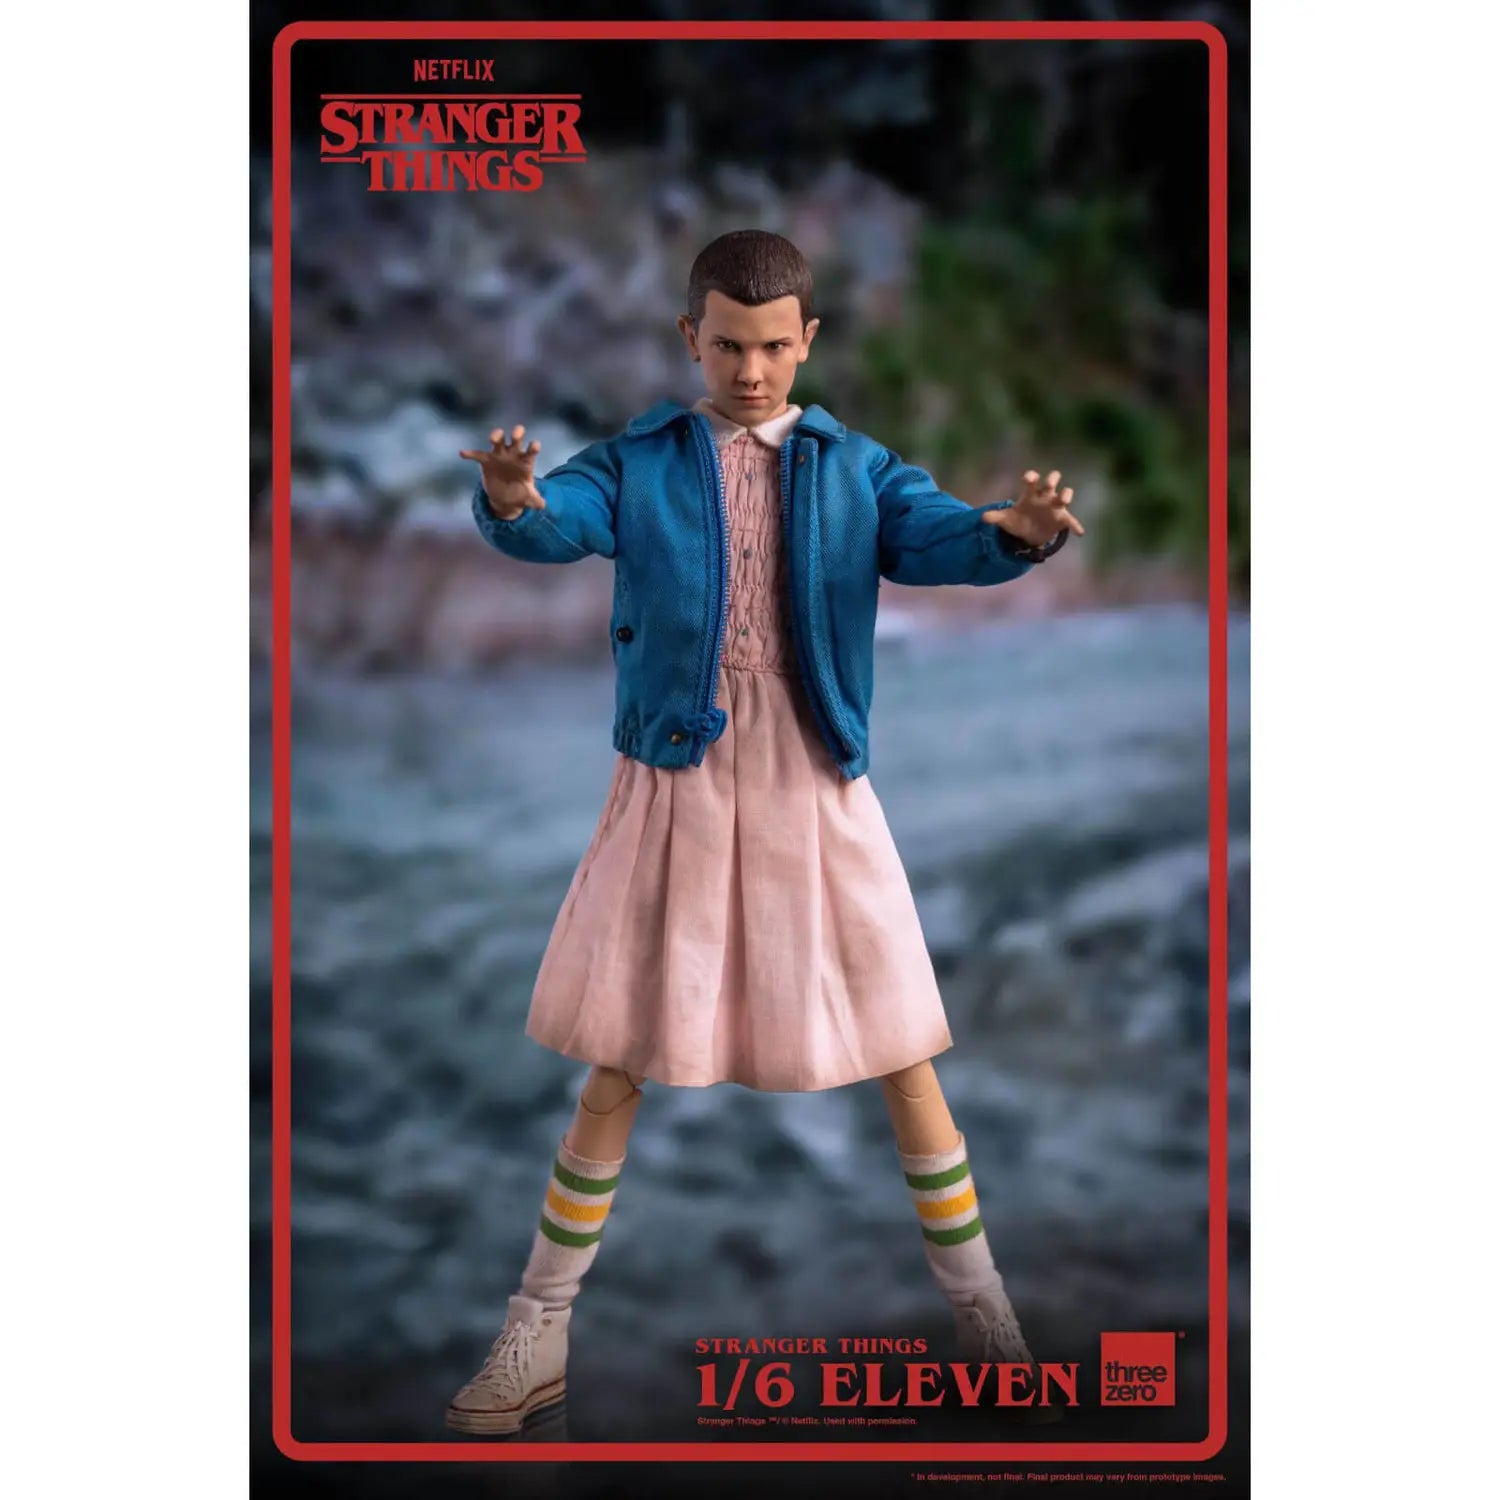 Hallmark Netflix Stranger Things Eleven Plastic Figurine Ornament